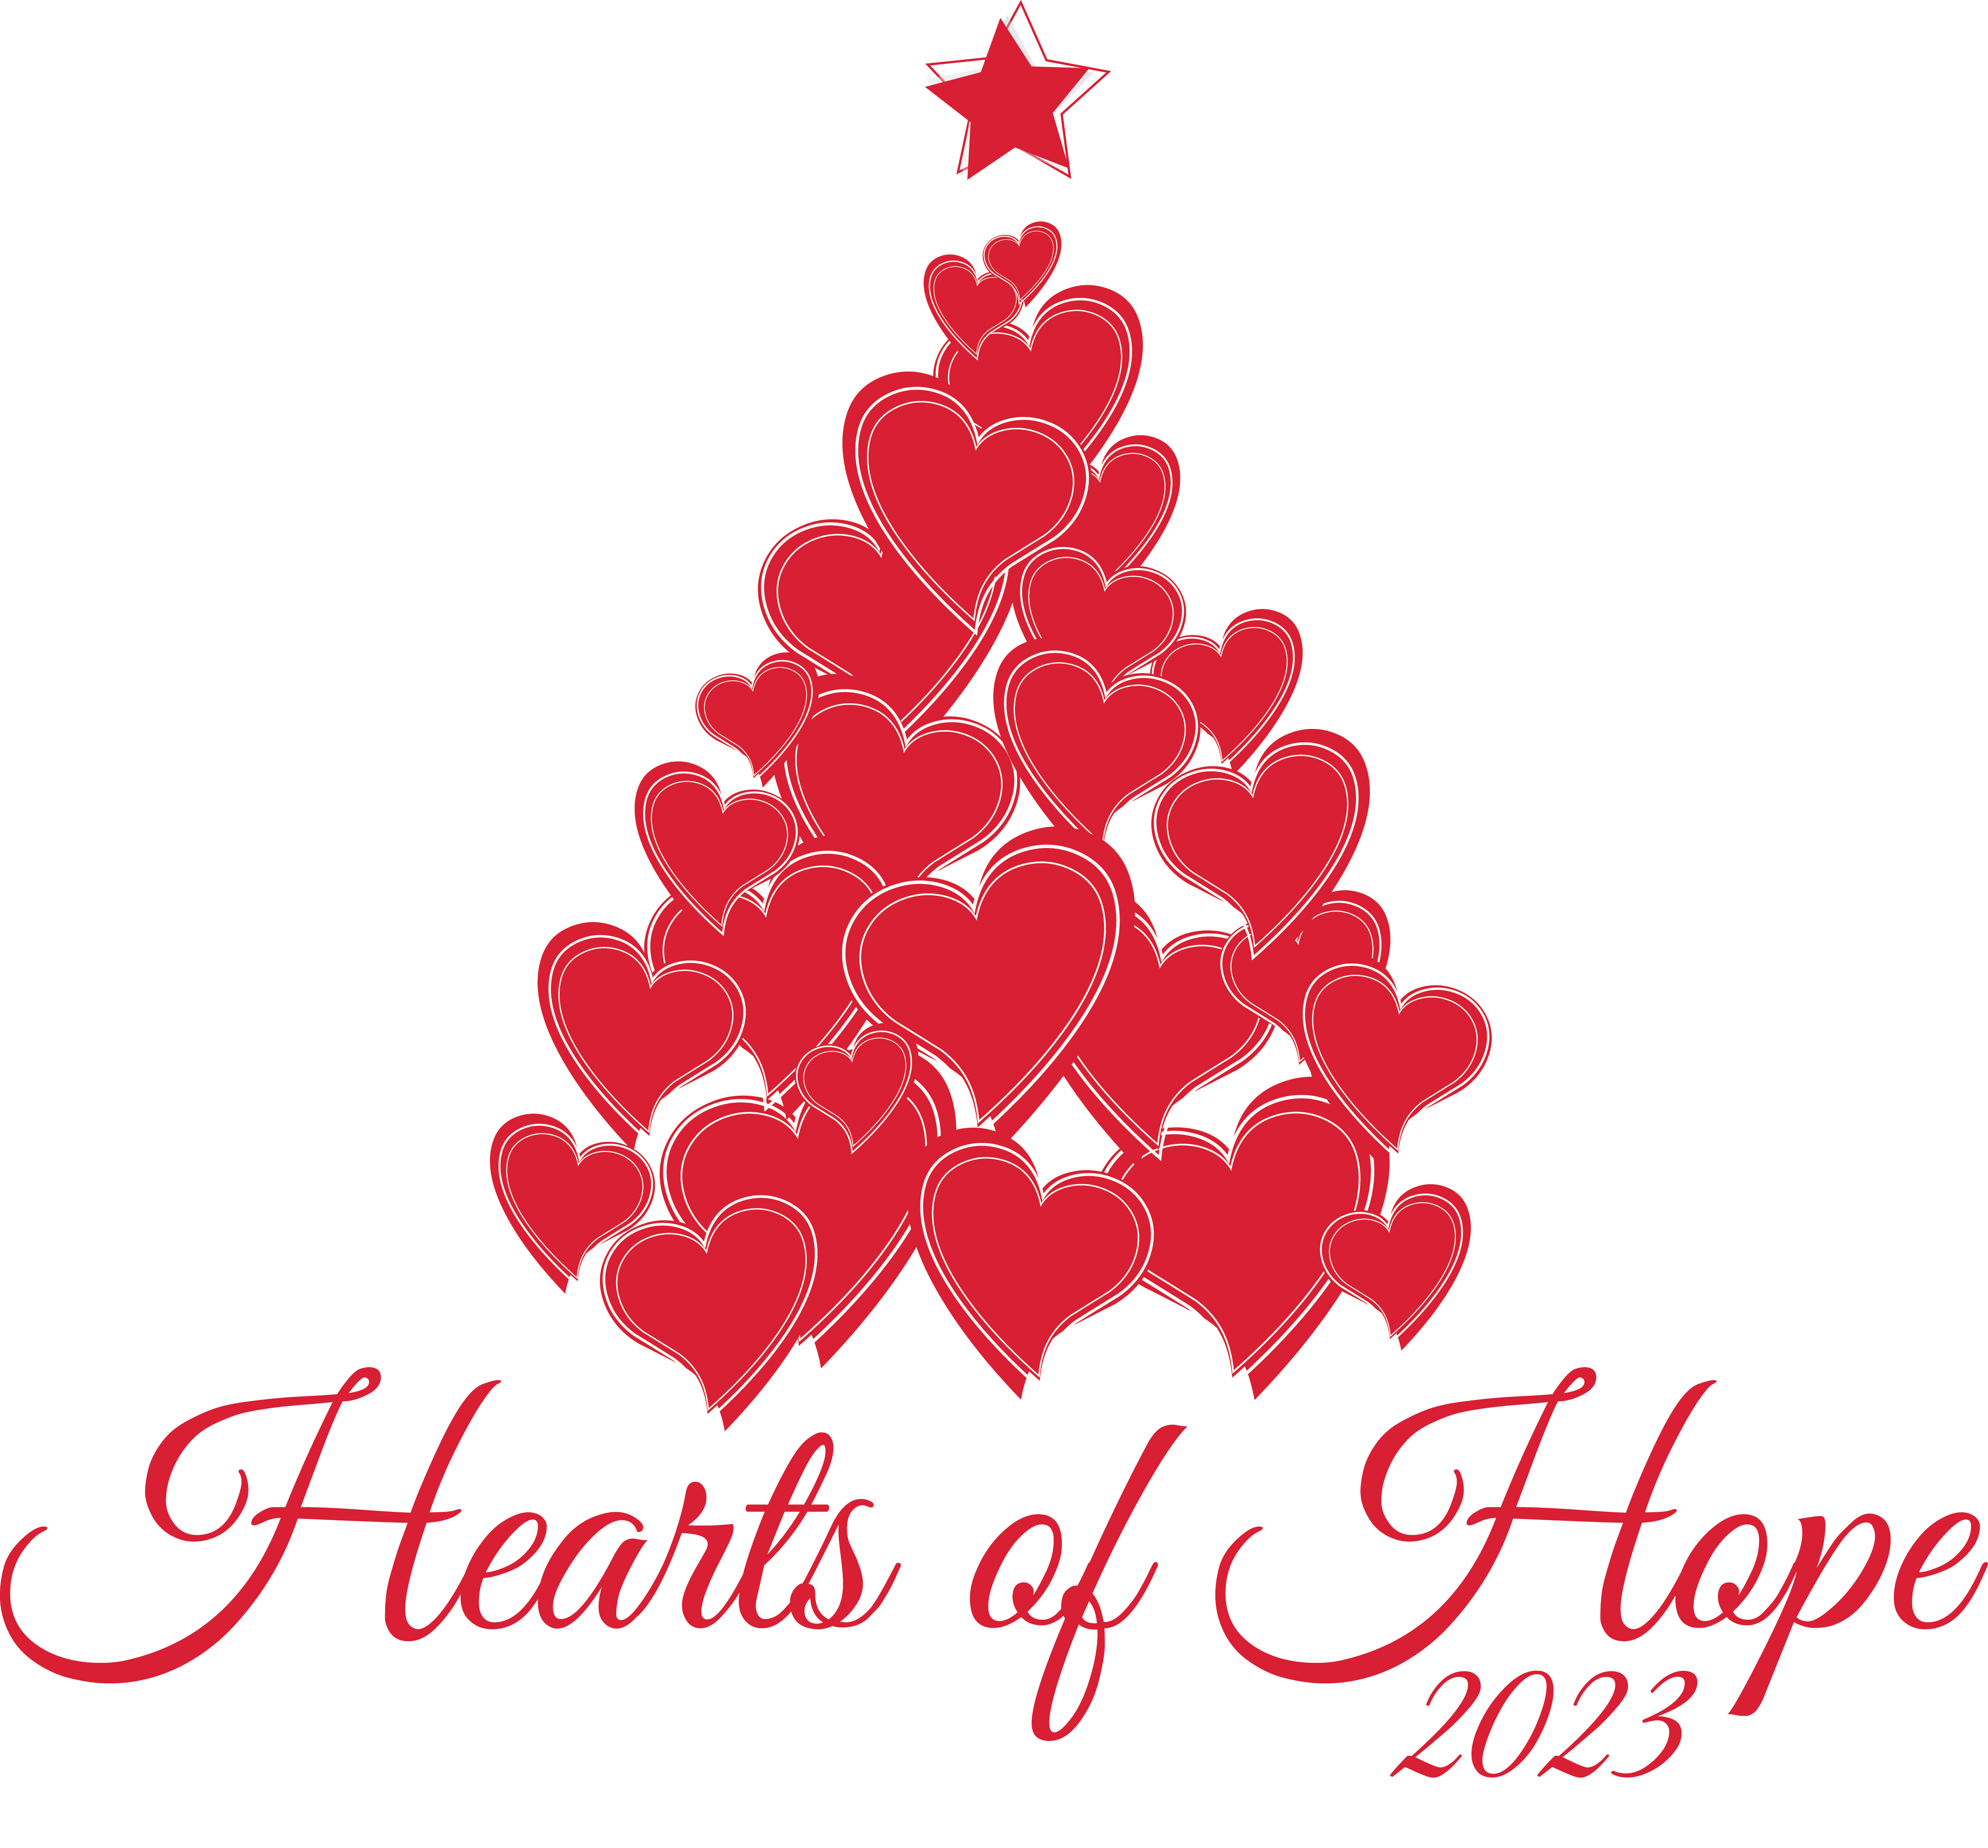 Nebraska Heart Hearts of Hope graphic